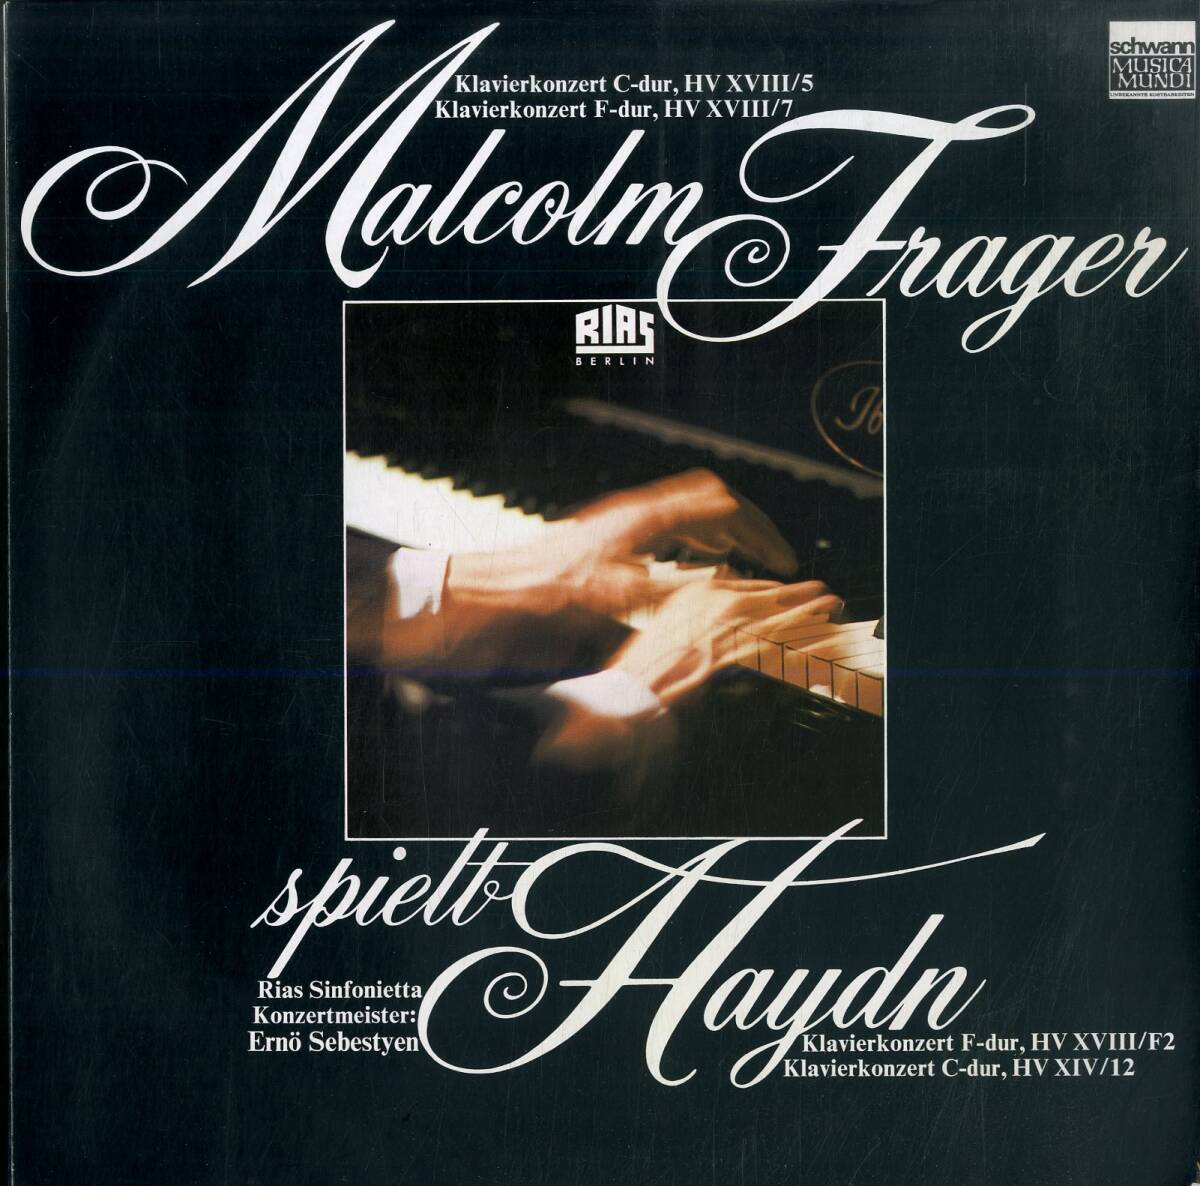 A00564275/LP/マルコム・フレイジャー(Pf)/エルネ・セベスチャン(指揮)「Malcolm Frager Spielt Haydn (1978年・VMS-2056)」の画像1